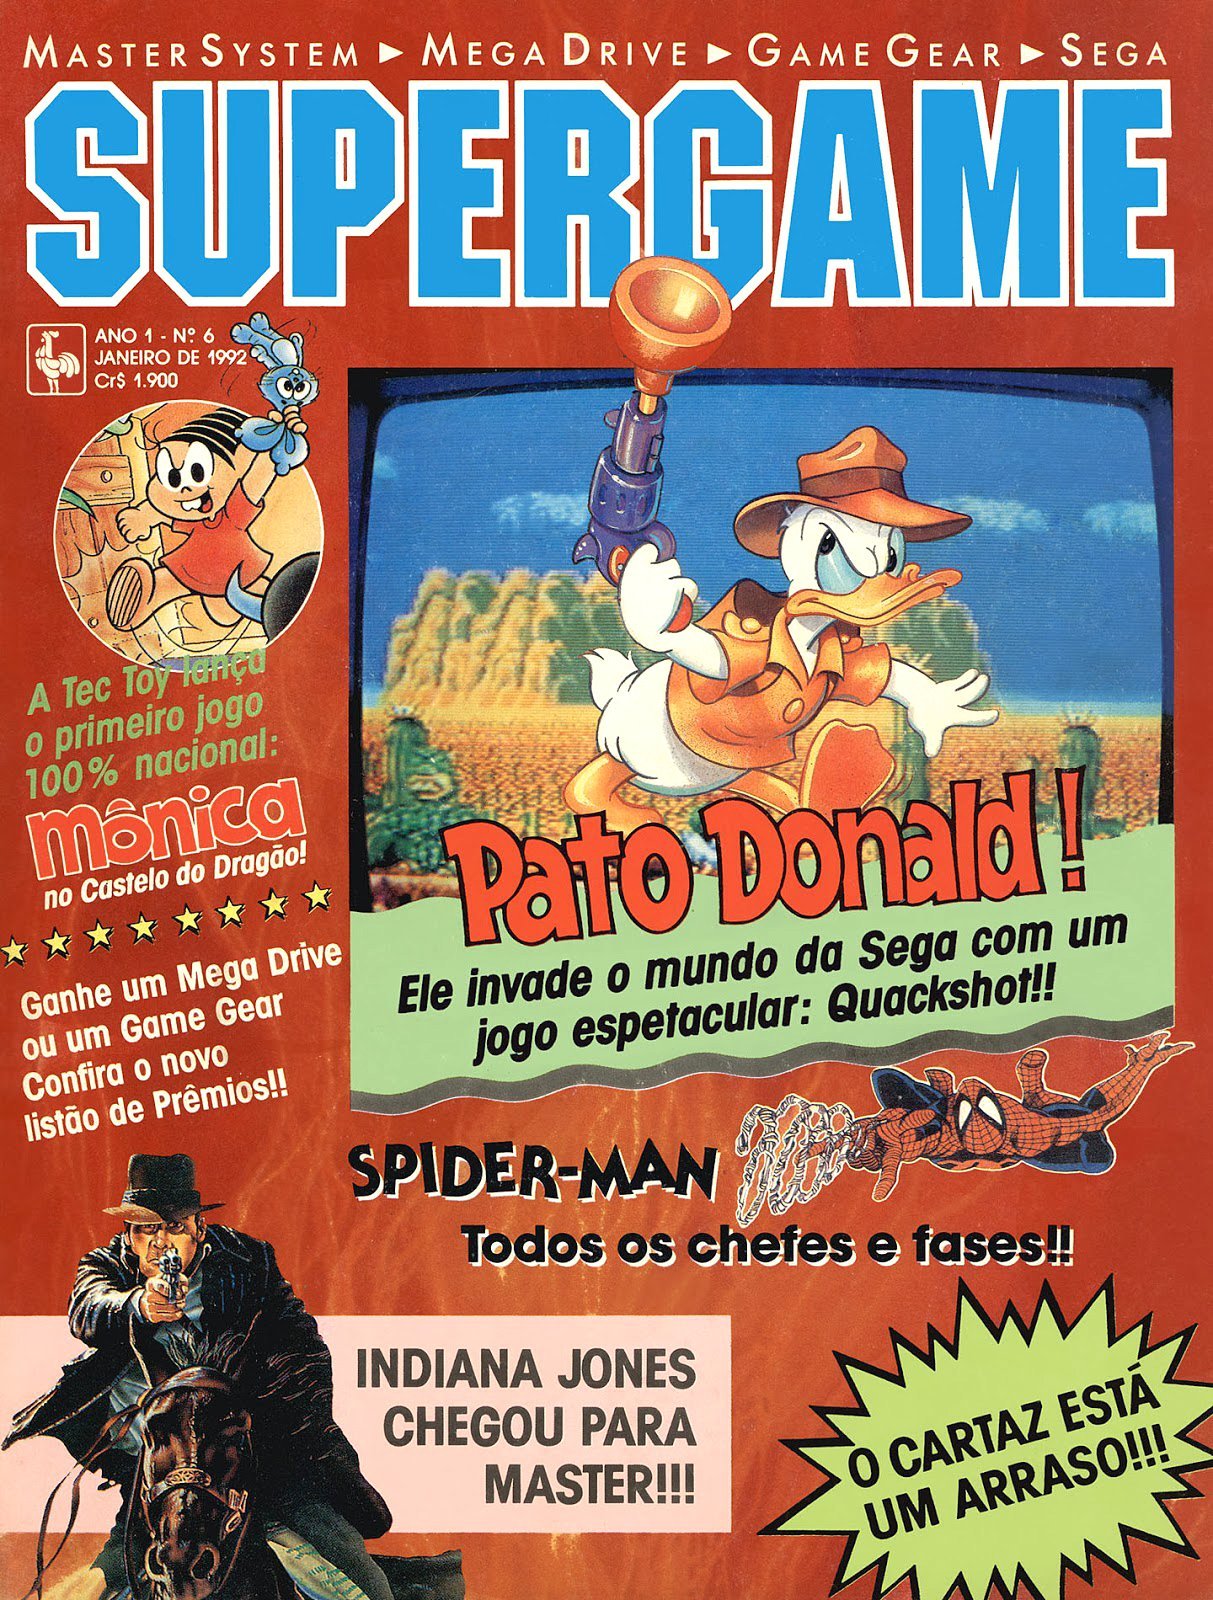 SuperGame 06 (January 1992)